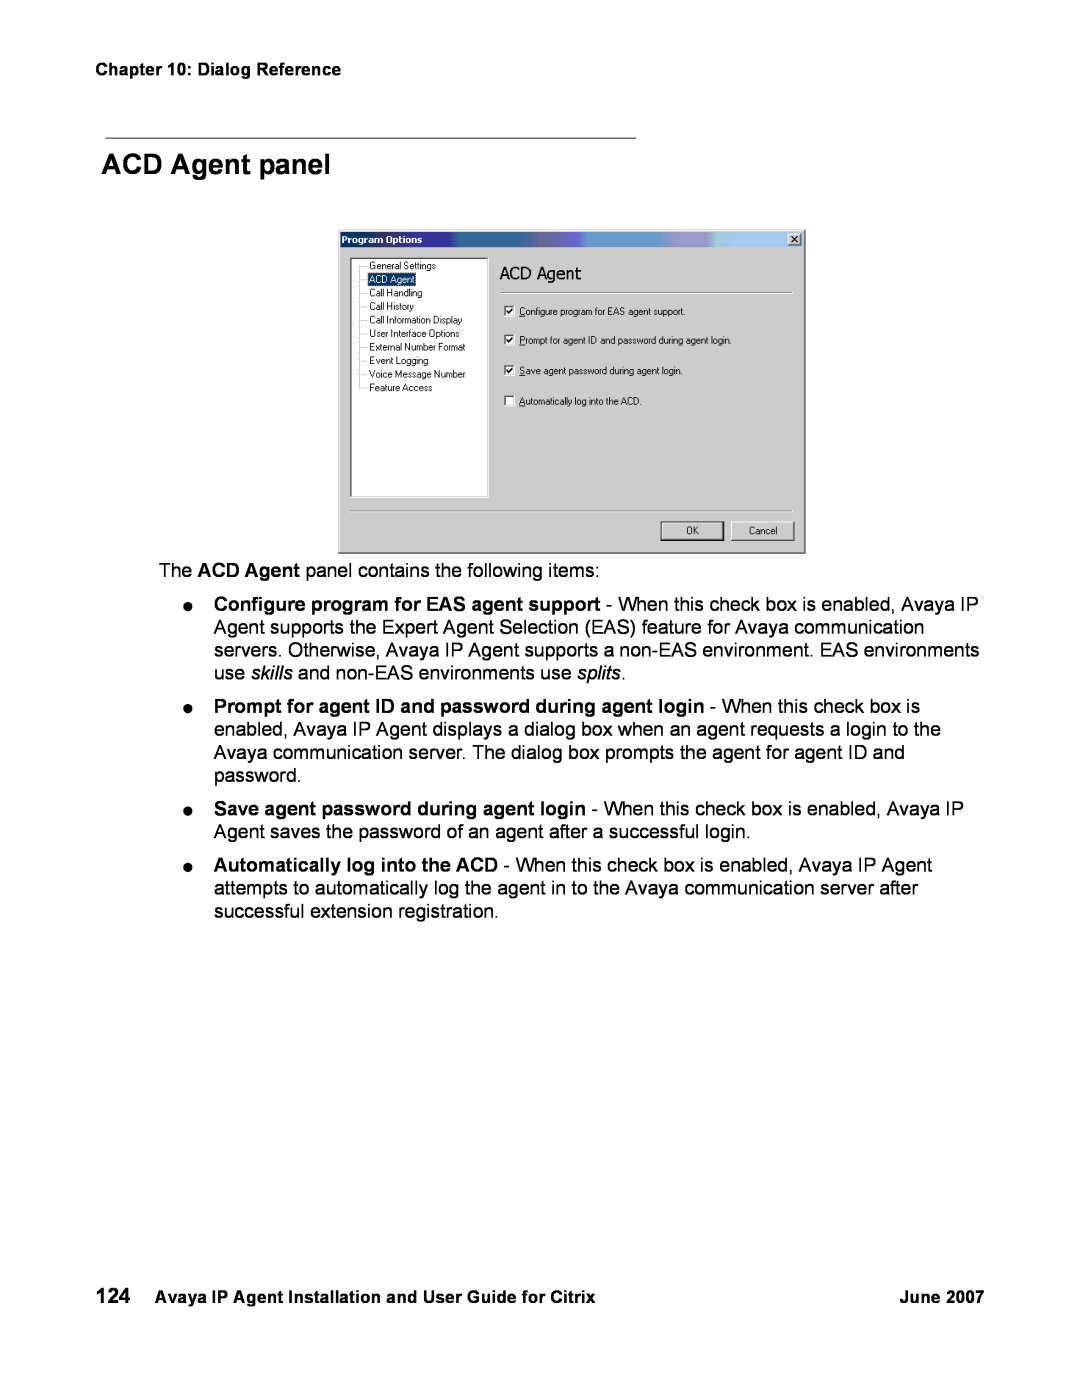 Avaya 7 manual ACD Agent panel 